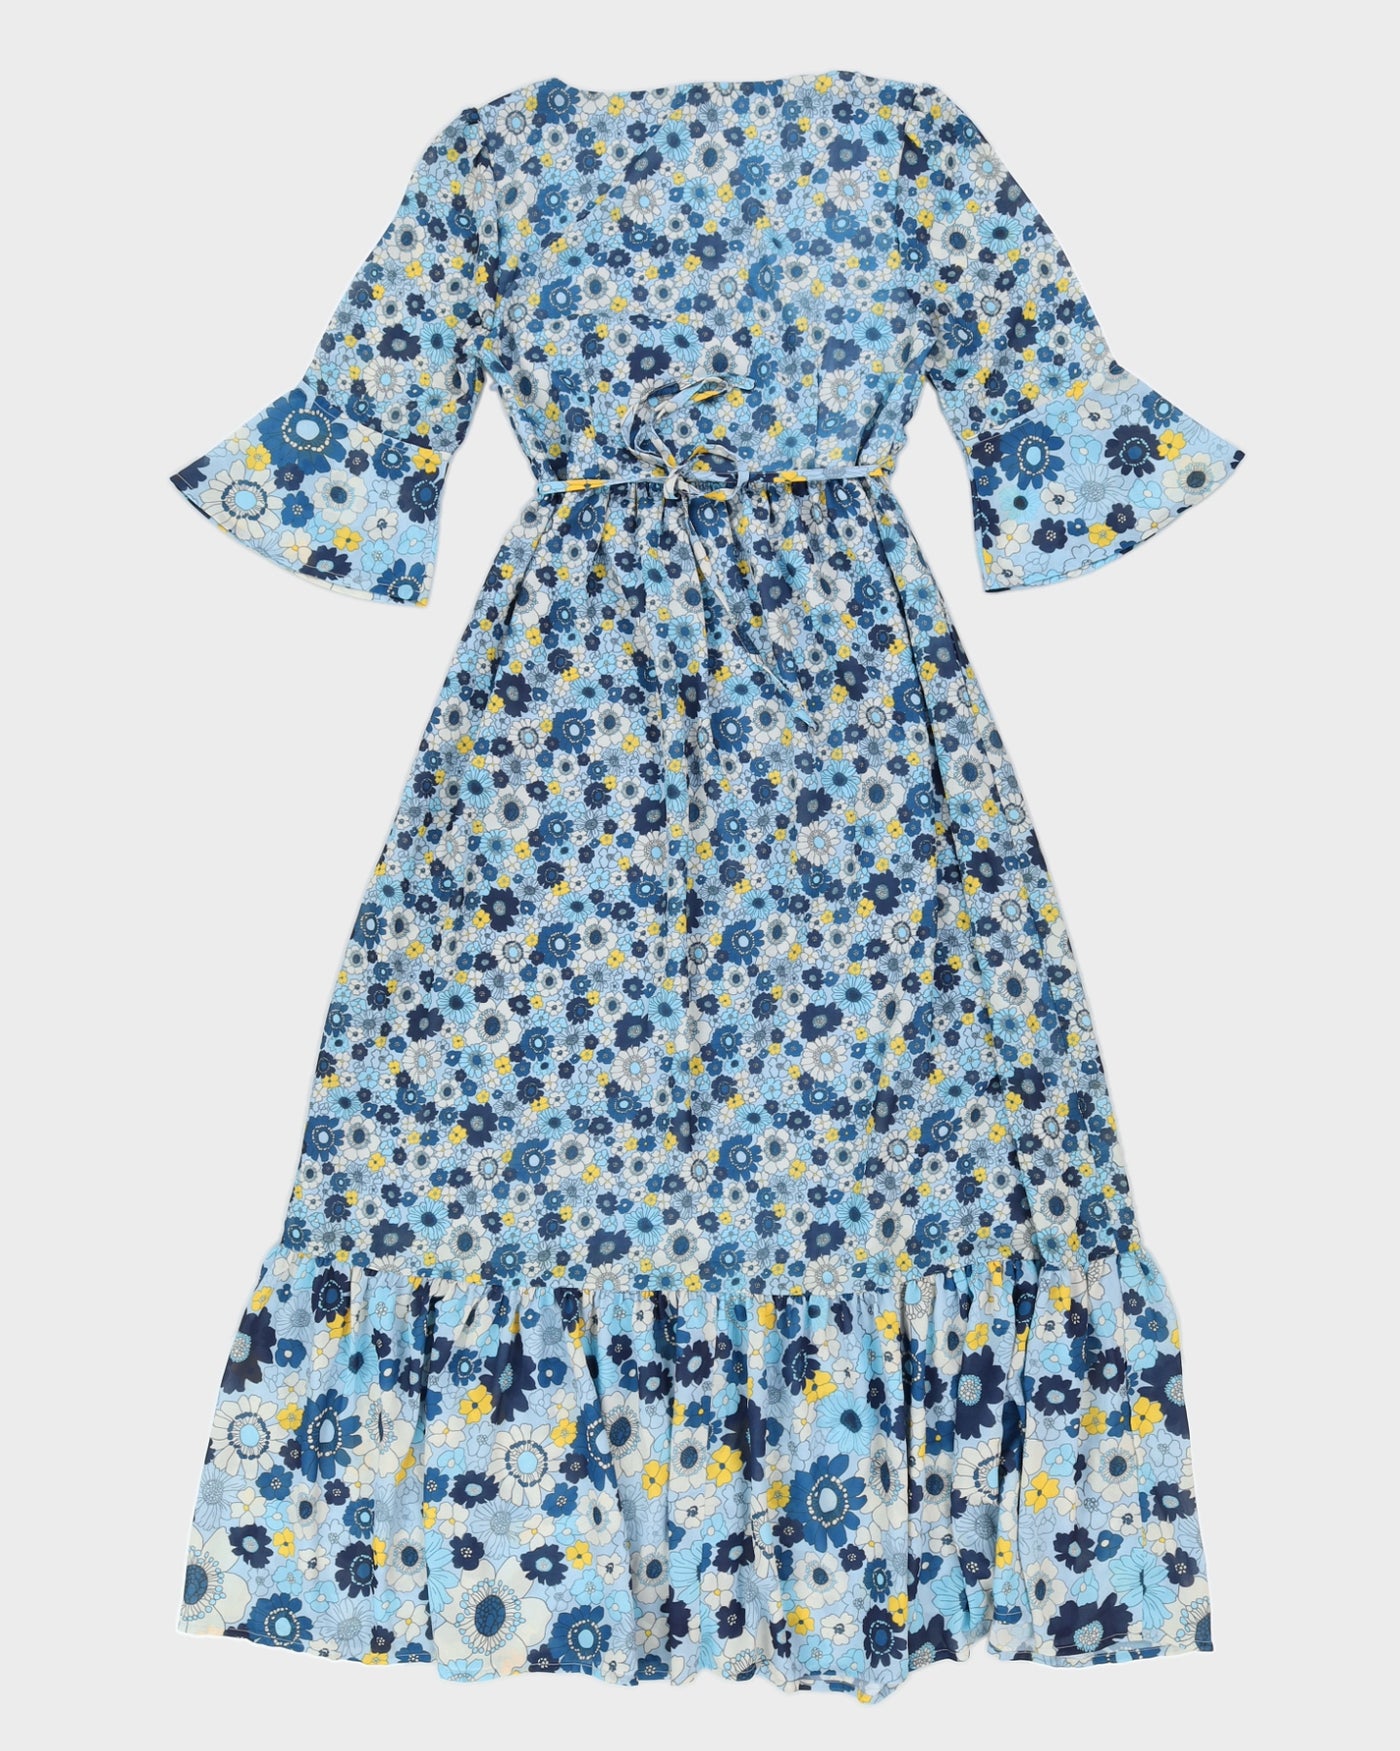 Benetton Blue & Yellow Floral Maxi Dress - M